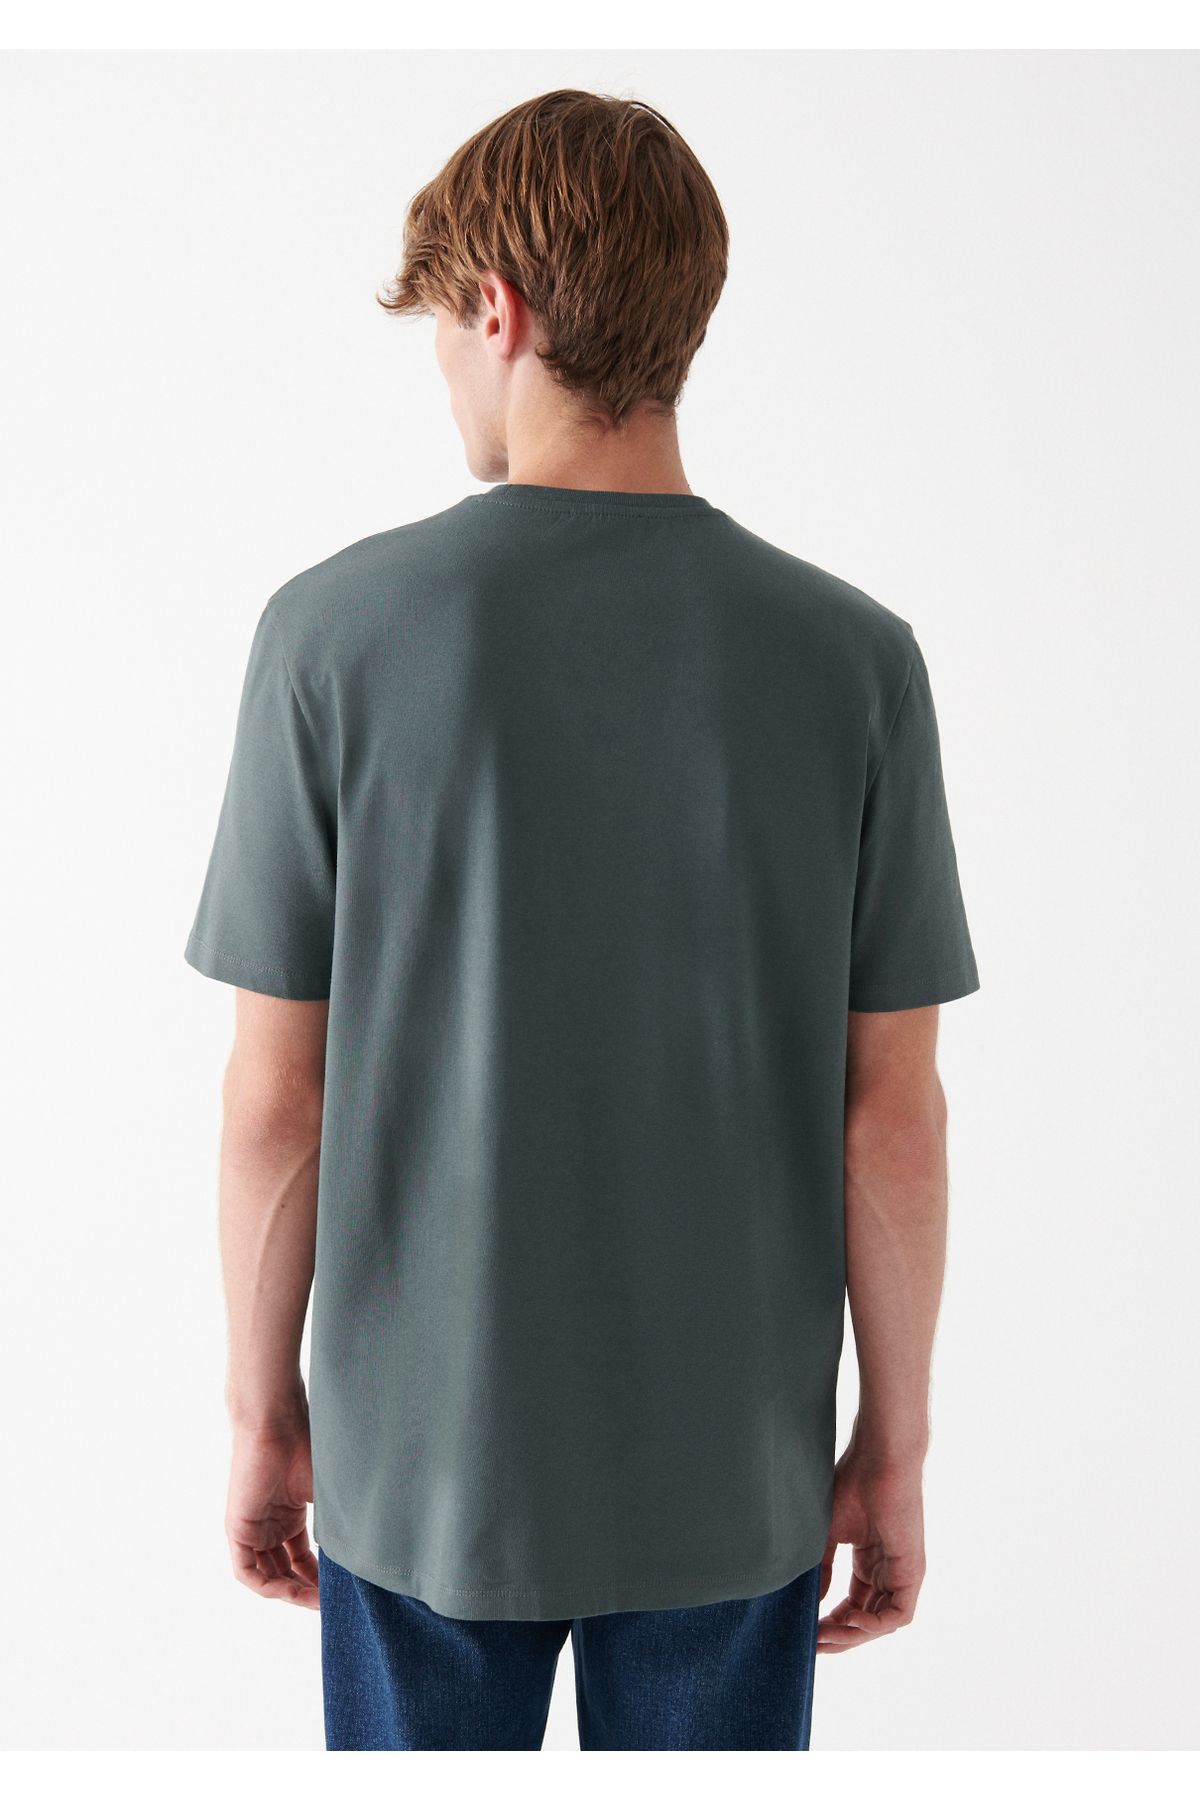 Mavi تی شرت پایه سبز نفتی مناسب / برش معمولی 0610252-71598